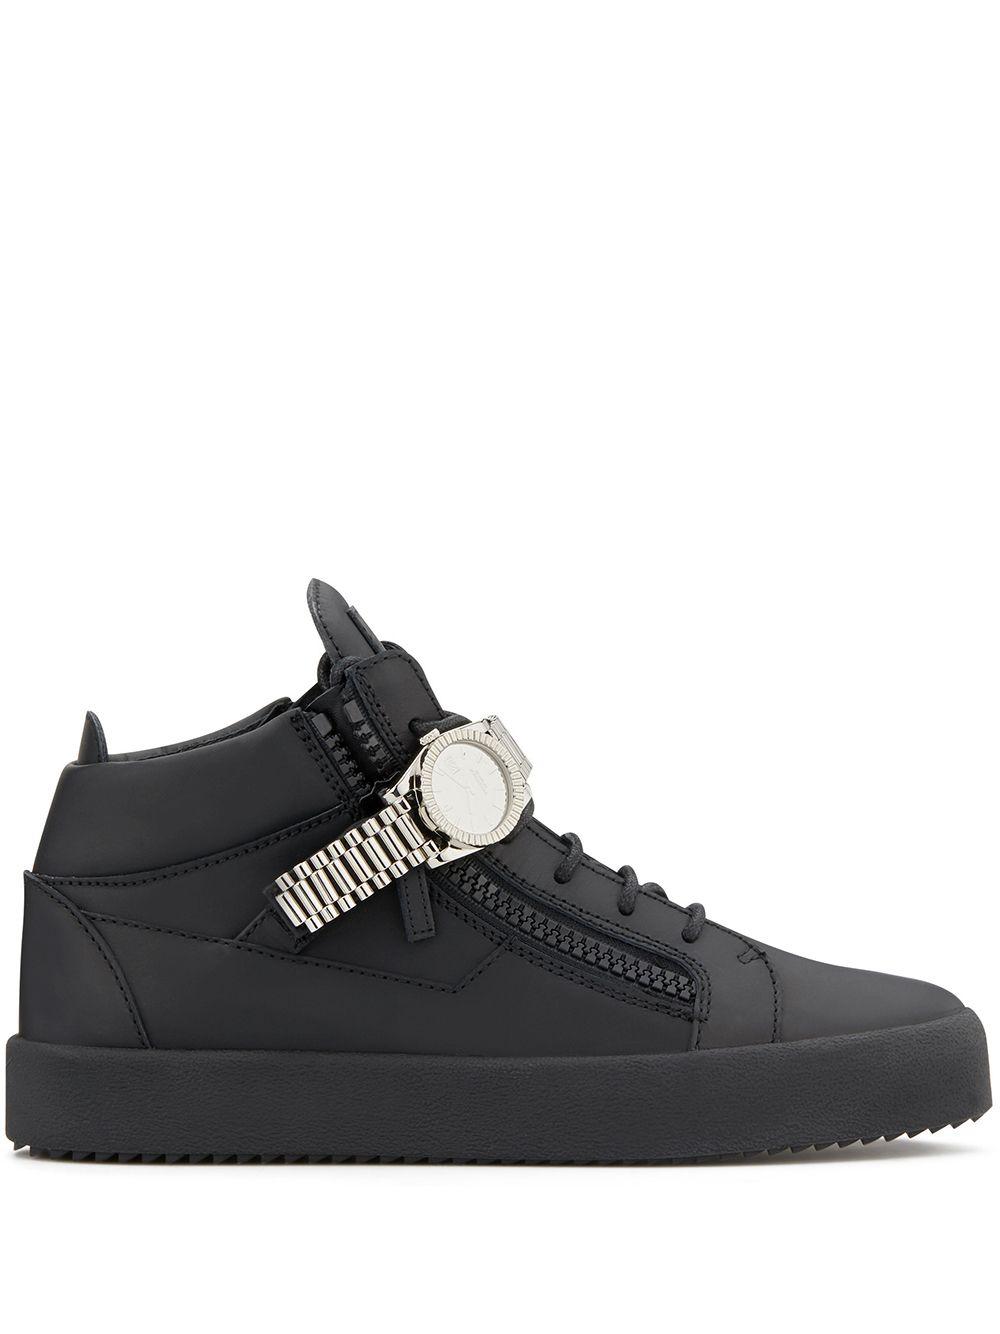 linse Colonial Mark Giuseppe Zanotti Watch Detail Sneakers in Black for Men - Lyst